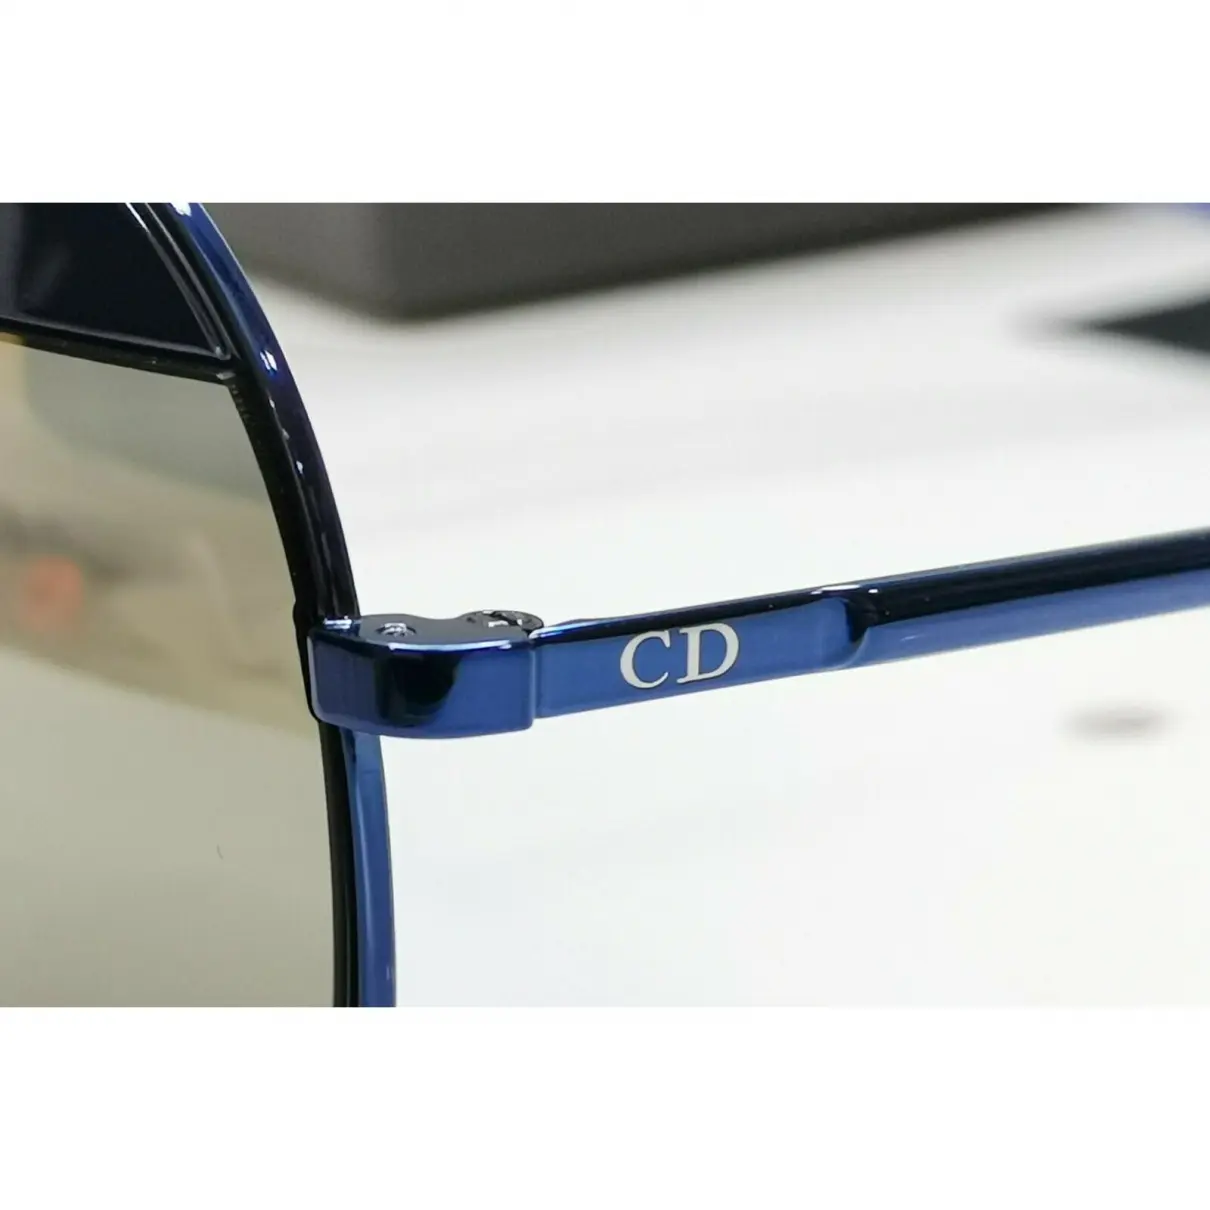 Buy Dior Sunglasses online - Vintage